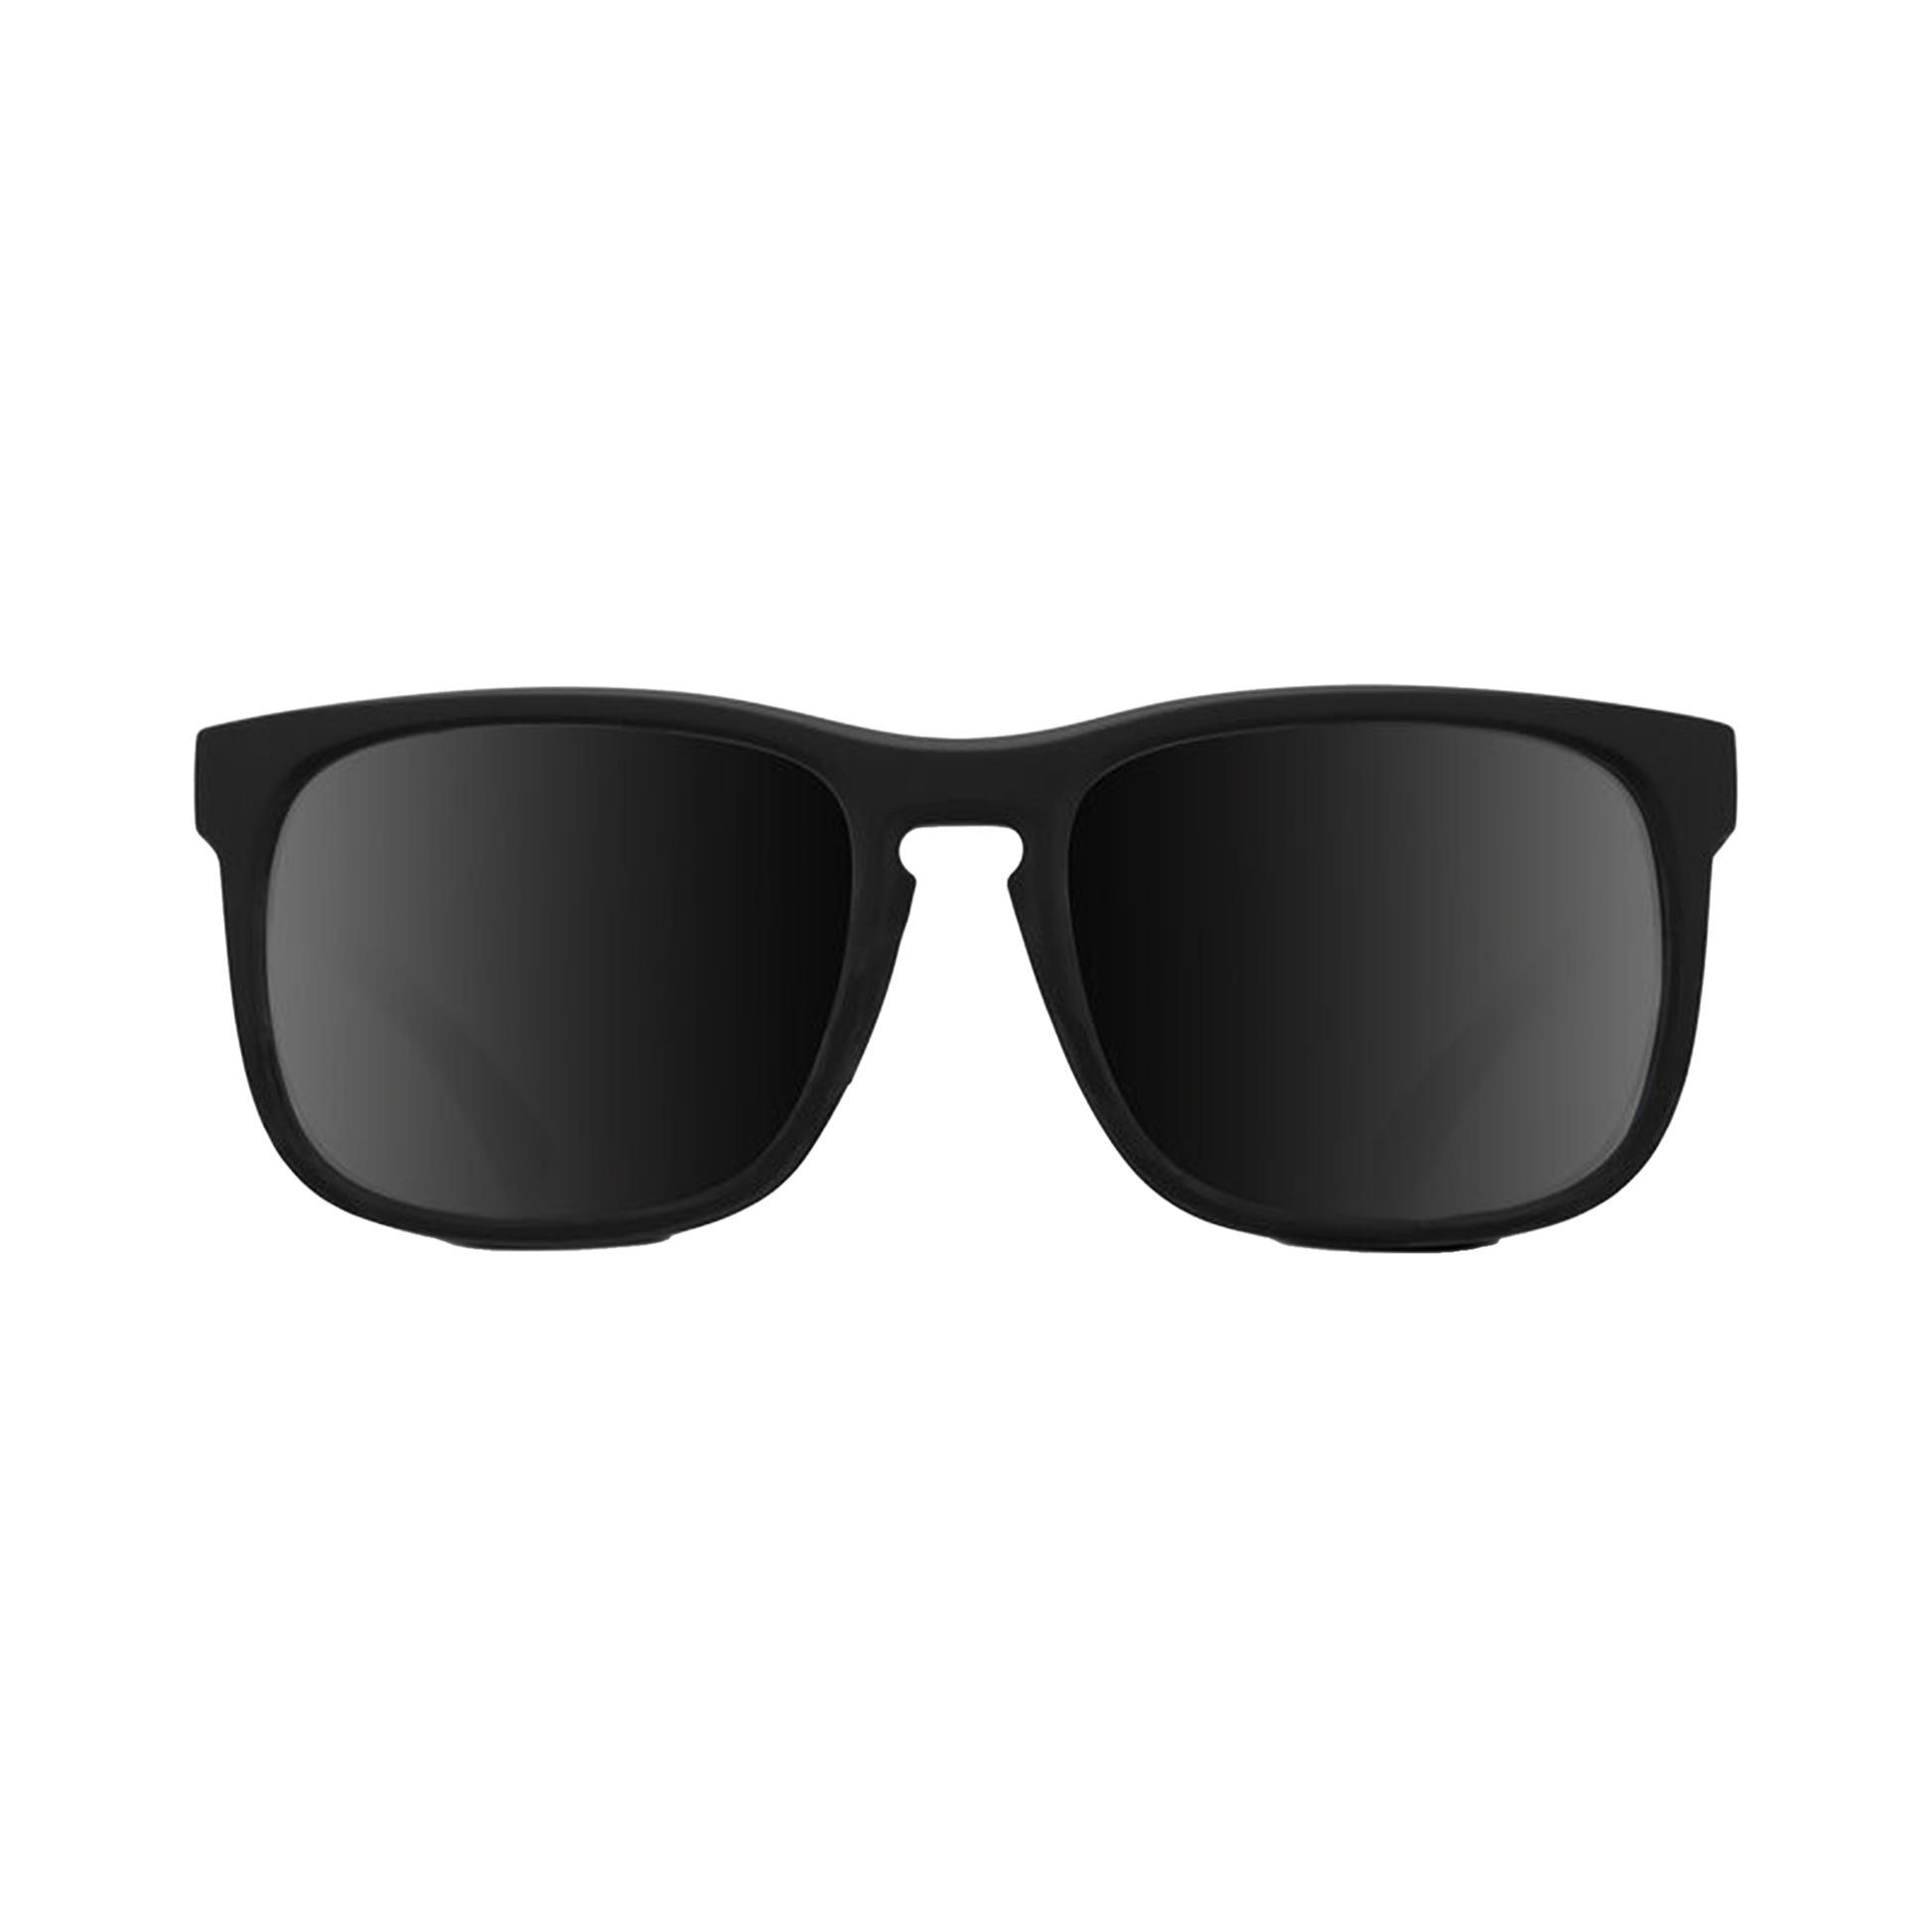 Giro Crest Sunglasses Matte Black Sunglasses